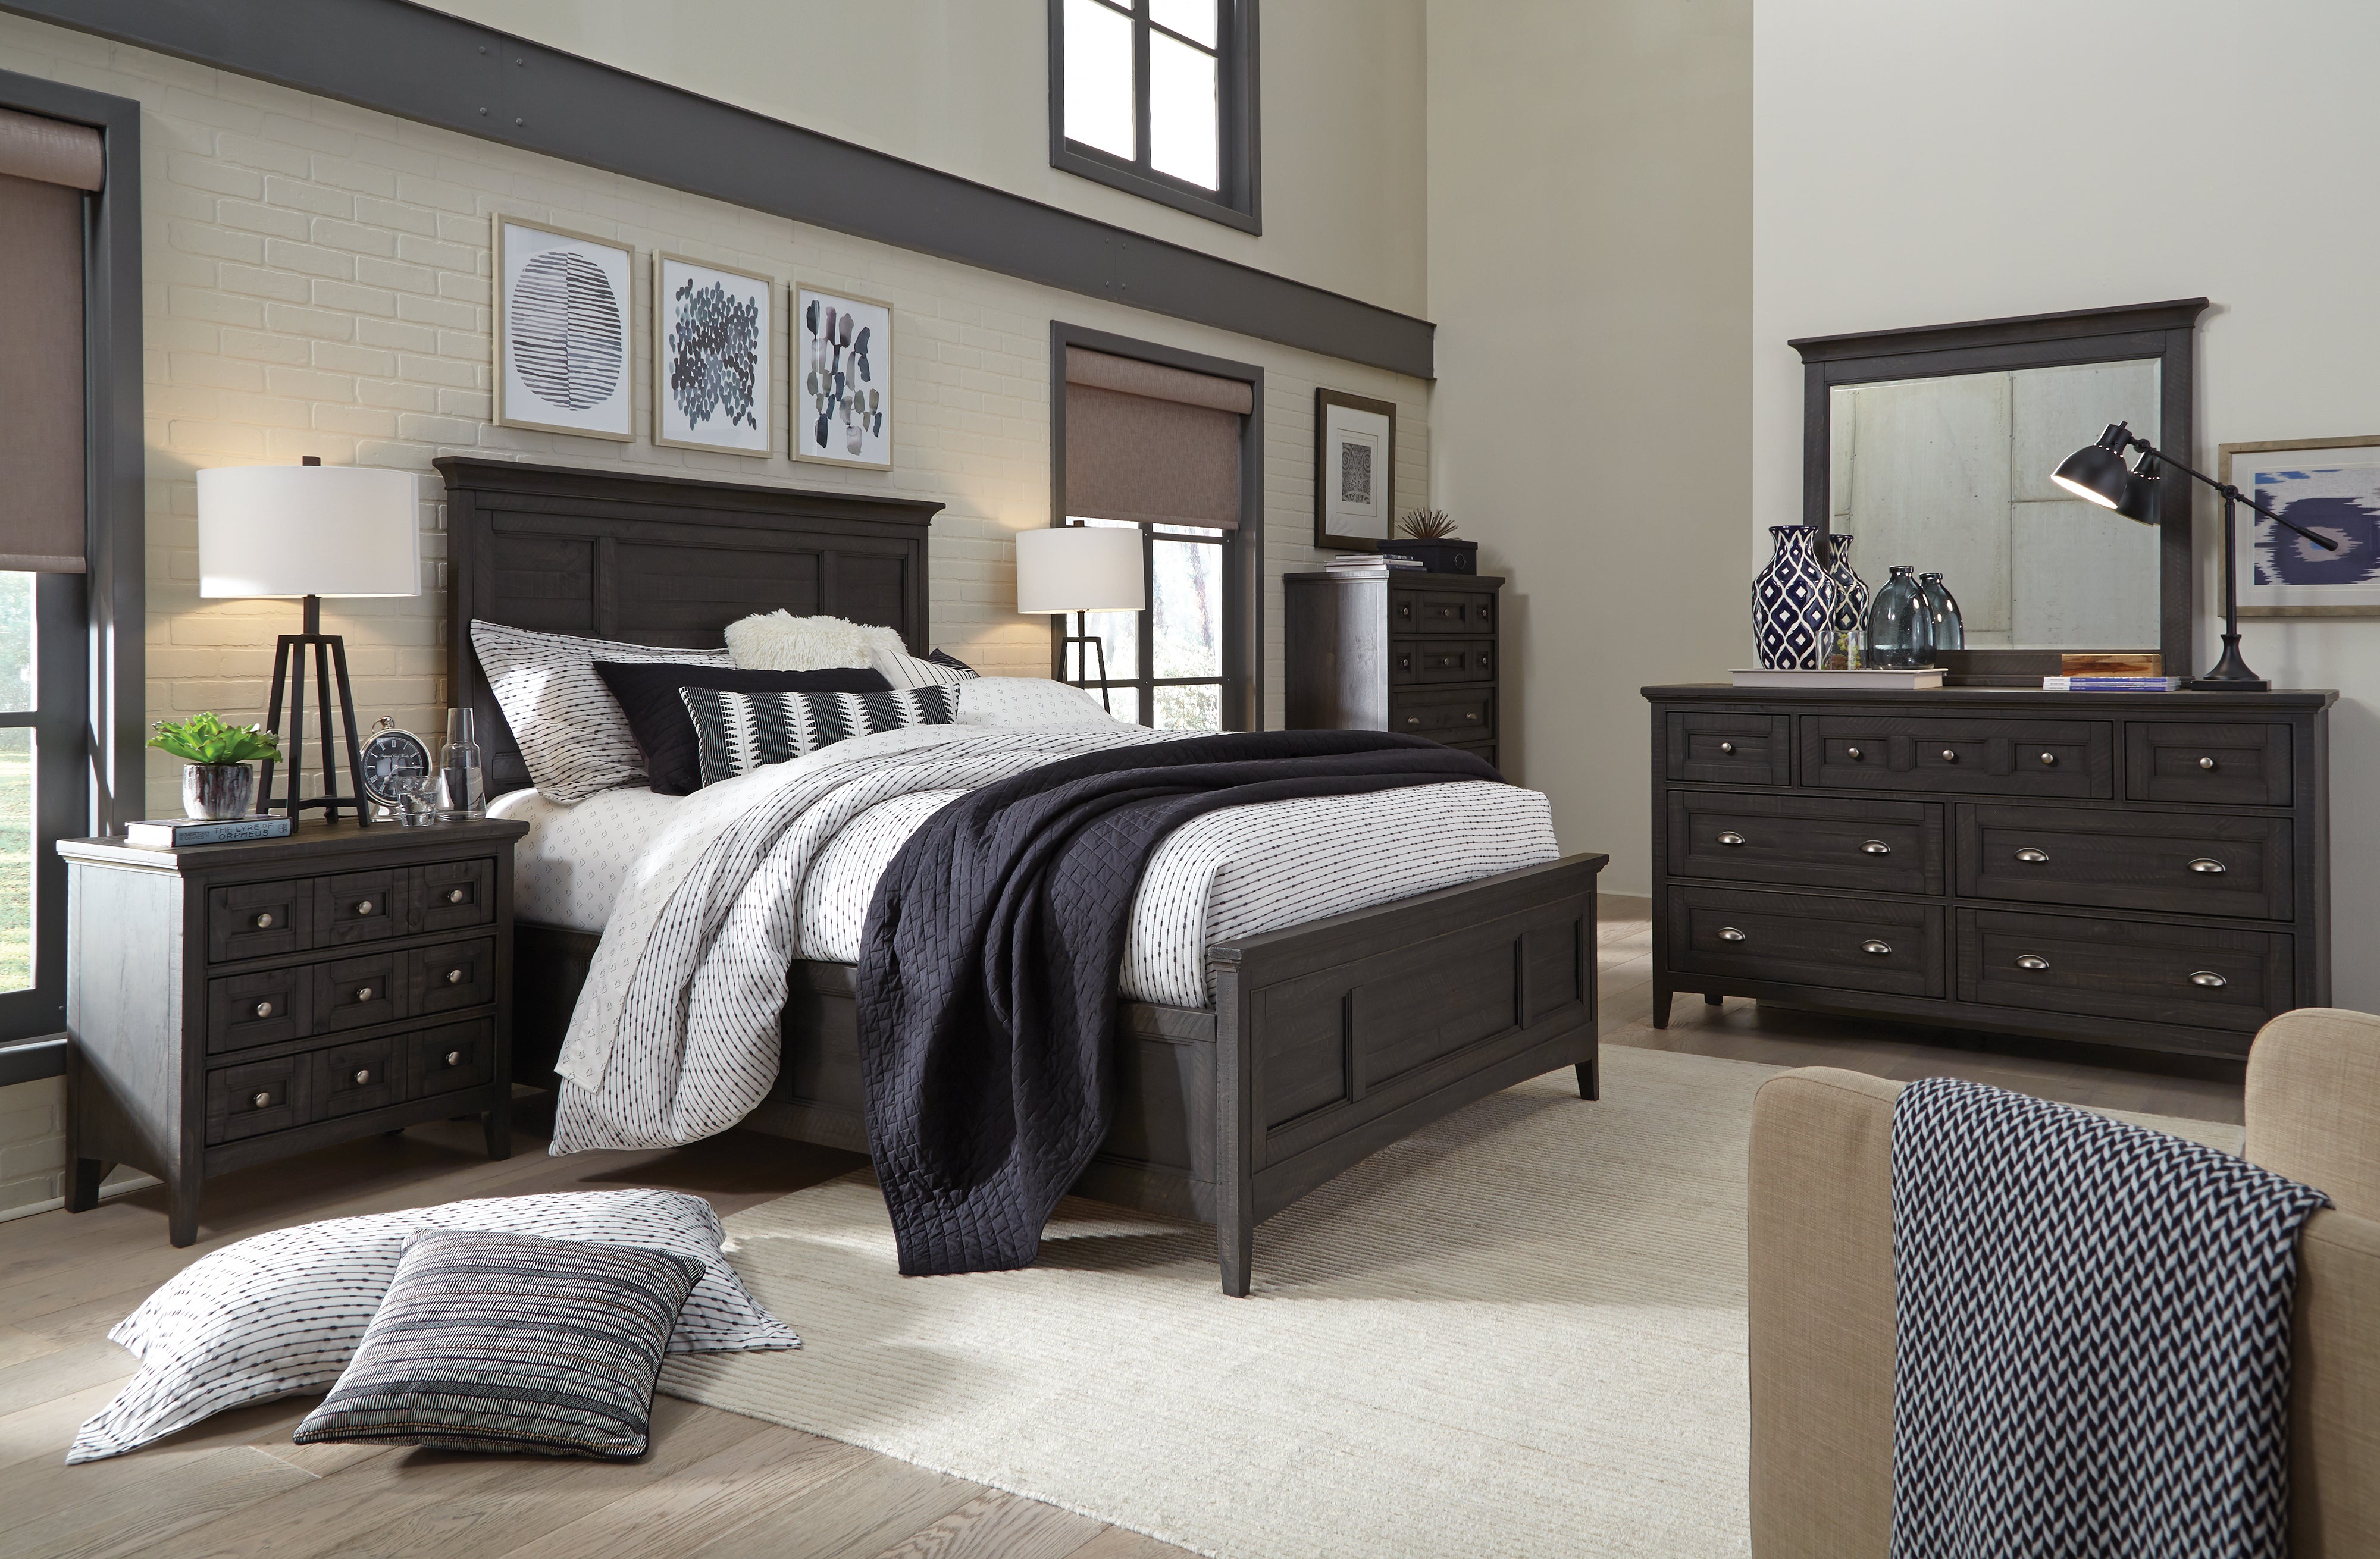 kentwood white bedroom furniture